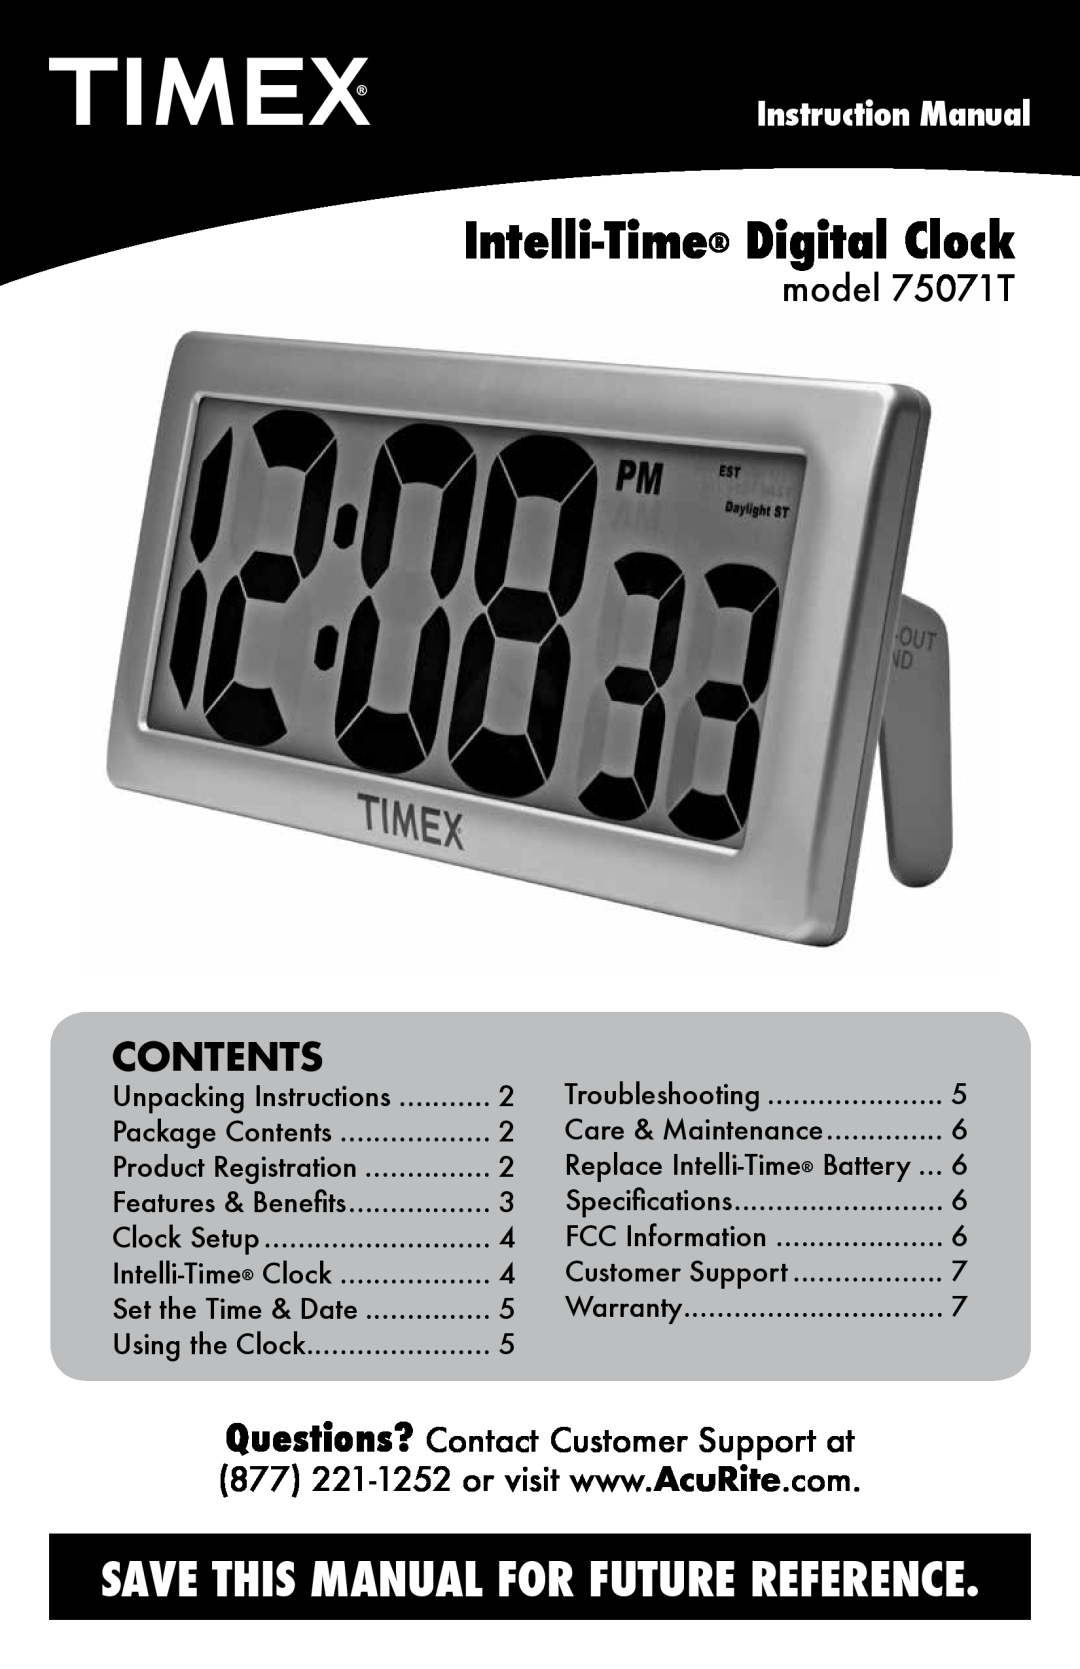 Timex instruction manual Contents, model 75071T, Instruction Manual, Intelli-Time Digital Clock 